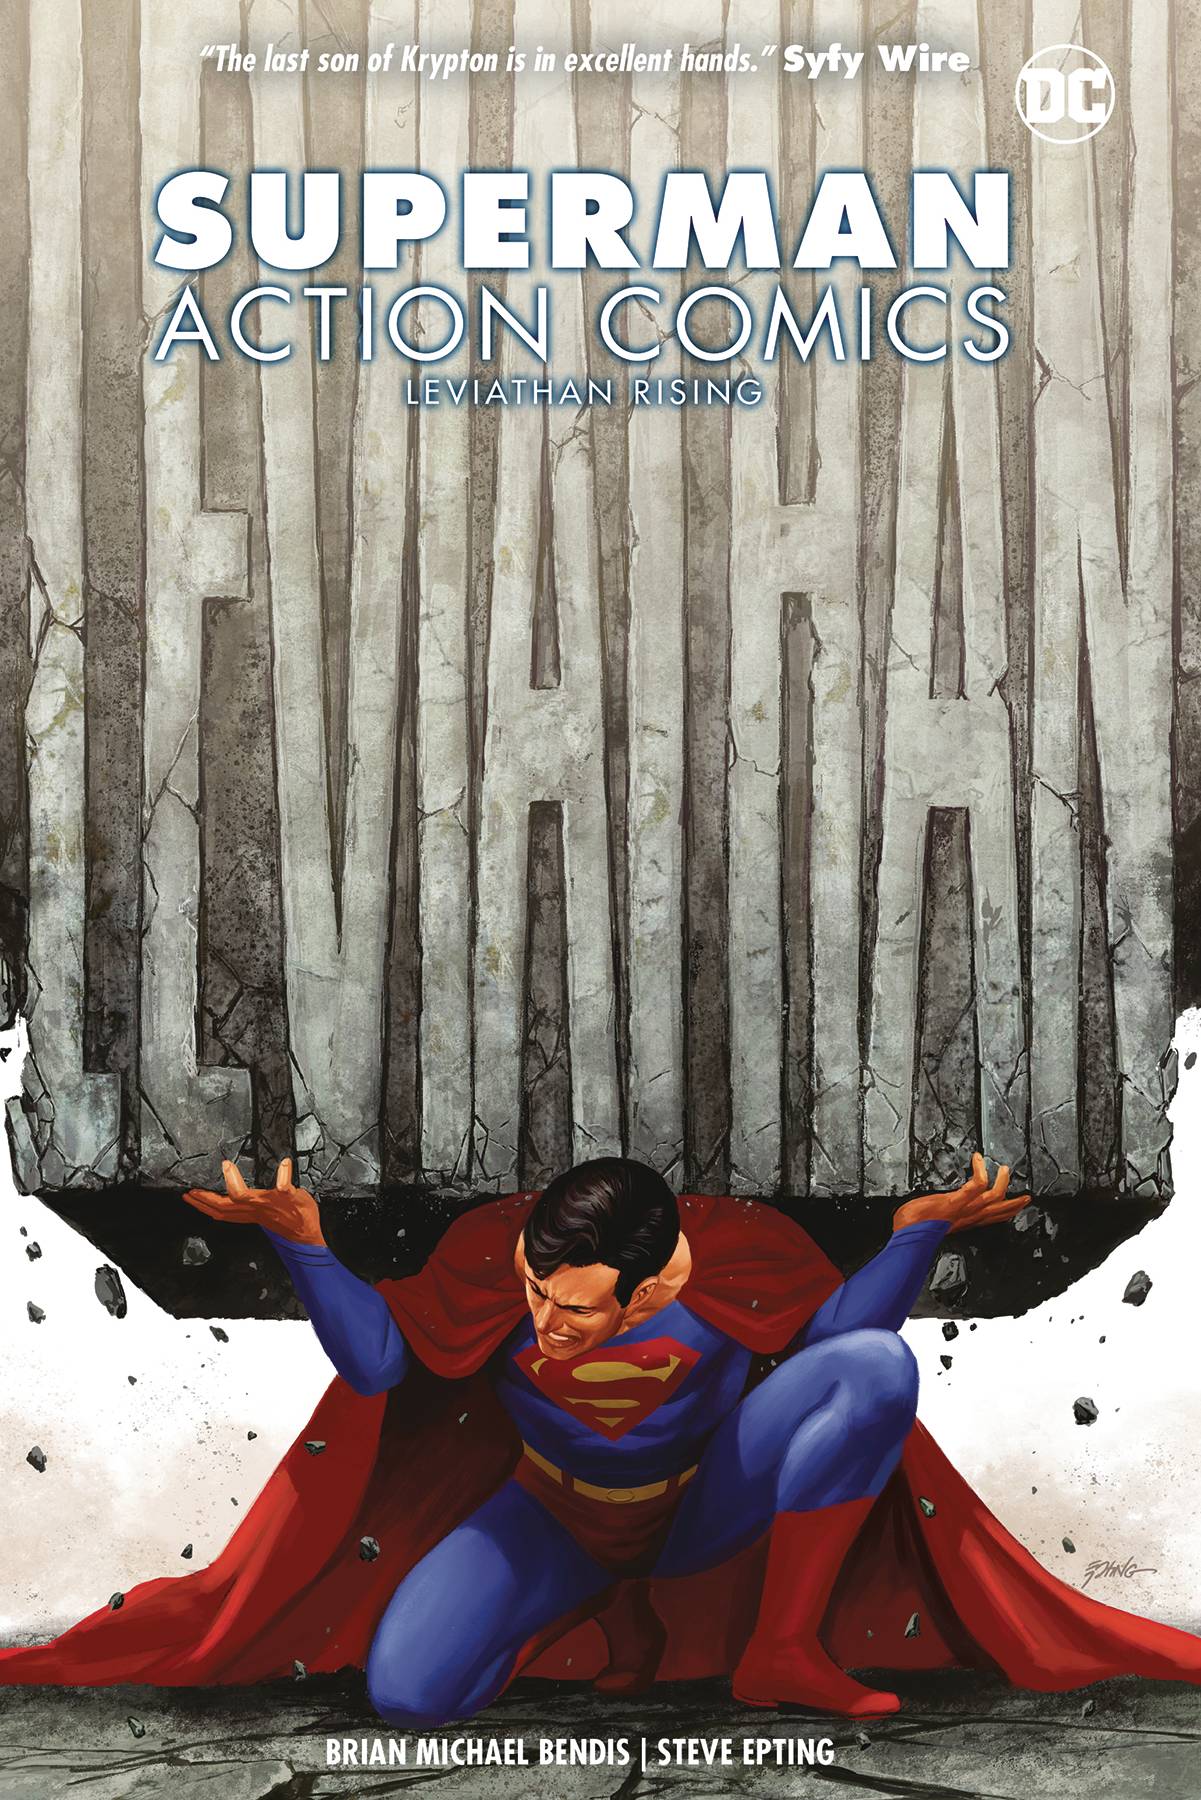 Superman Action Comics Vol. 02 Leviathan Rising